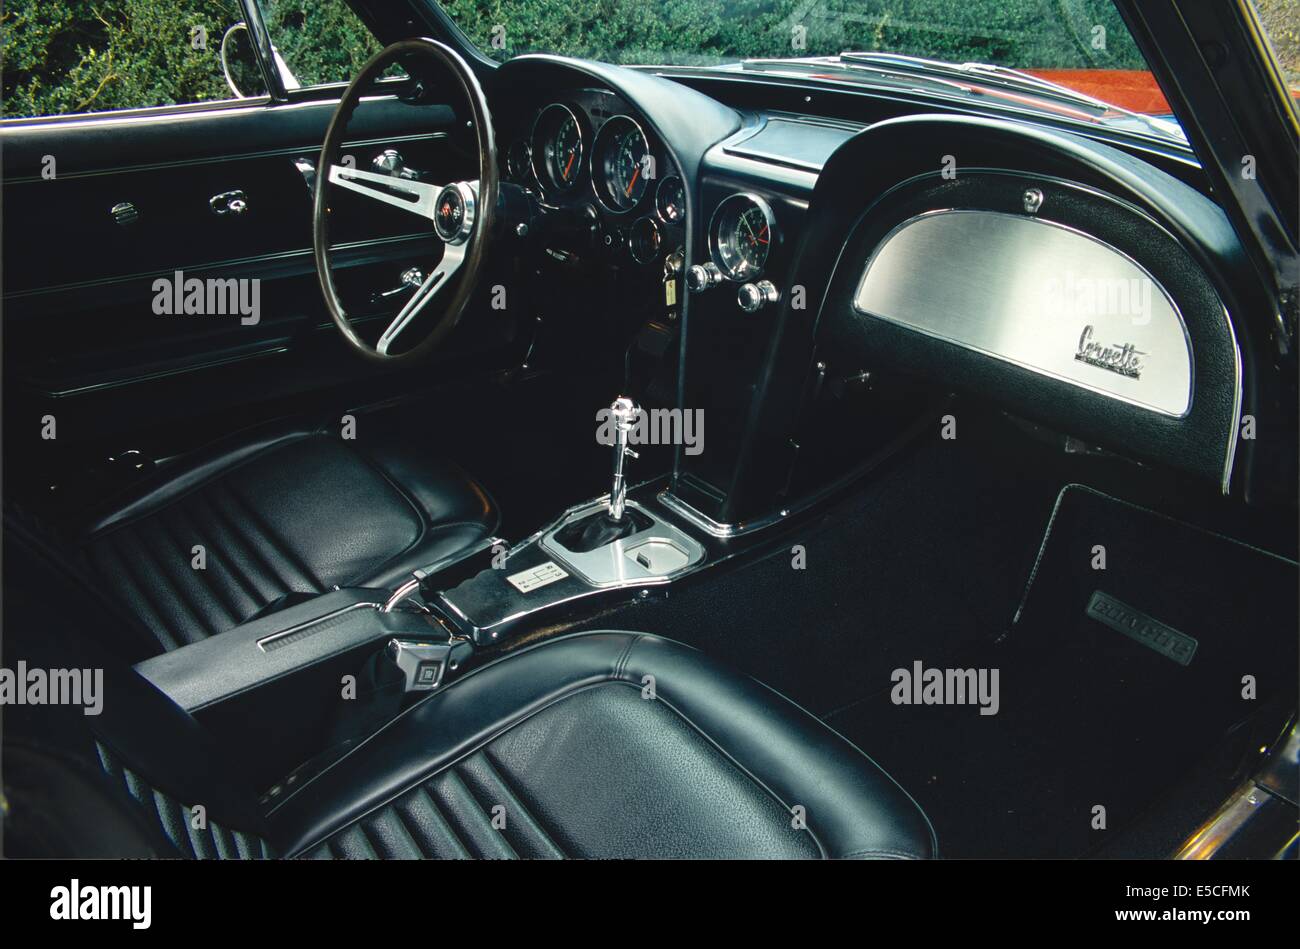 Chevrolet Corvette Stingray C2 - 1967 Model 427 Cubic inch Engine in black  - showing interior Stock Photo - Alamy